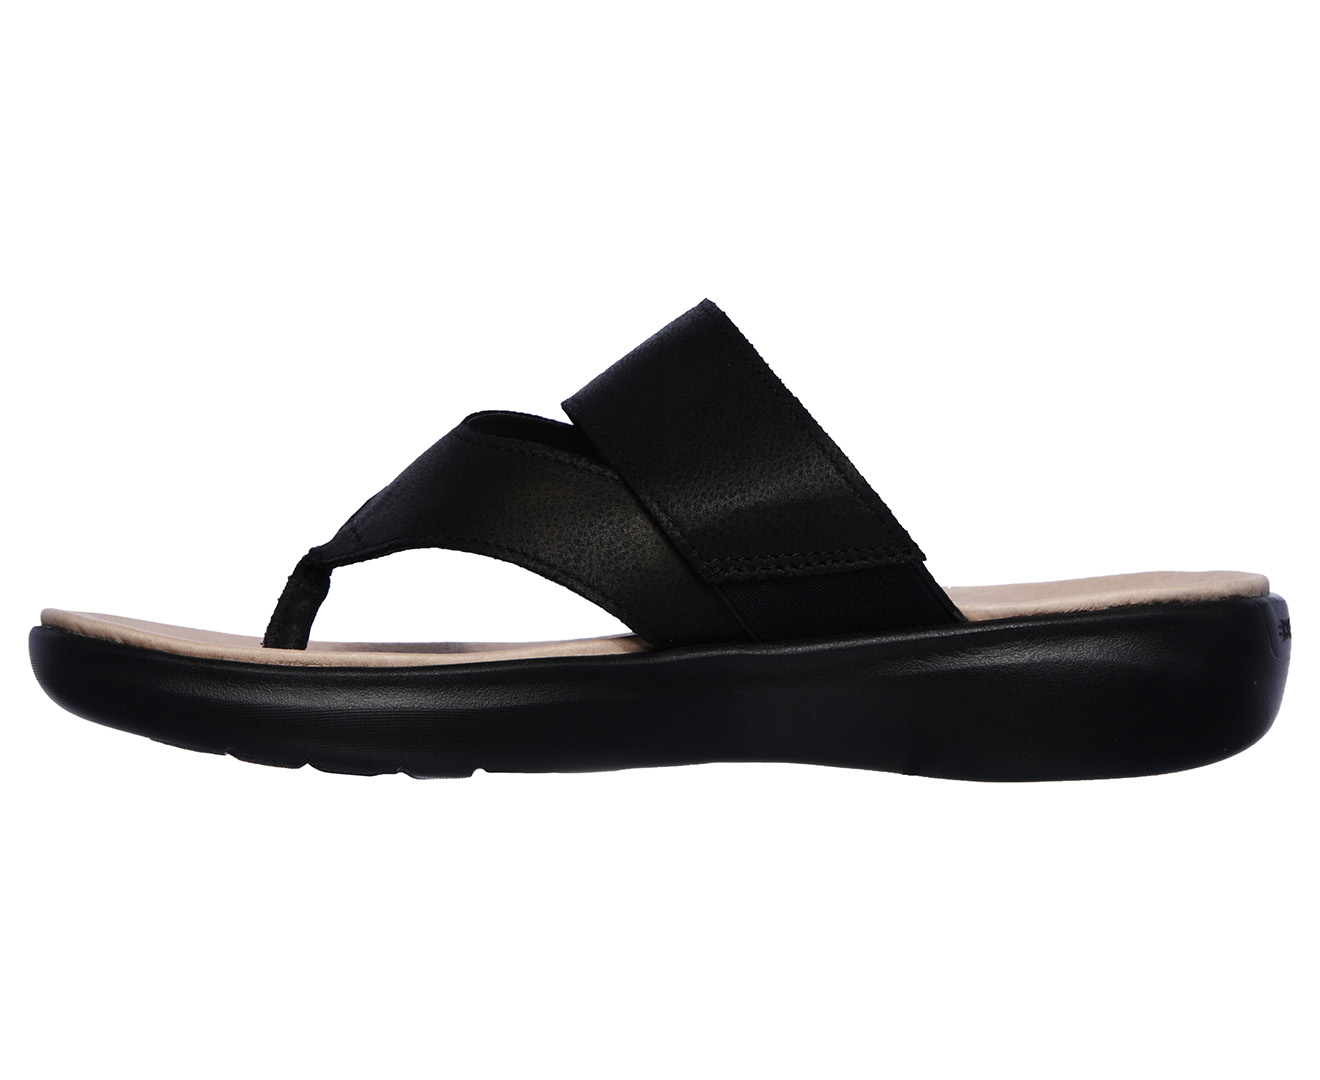 Skechers Women's On The GO Luxe Sandal Shoes - Black | Catch.com.au